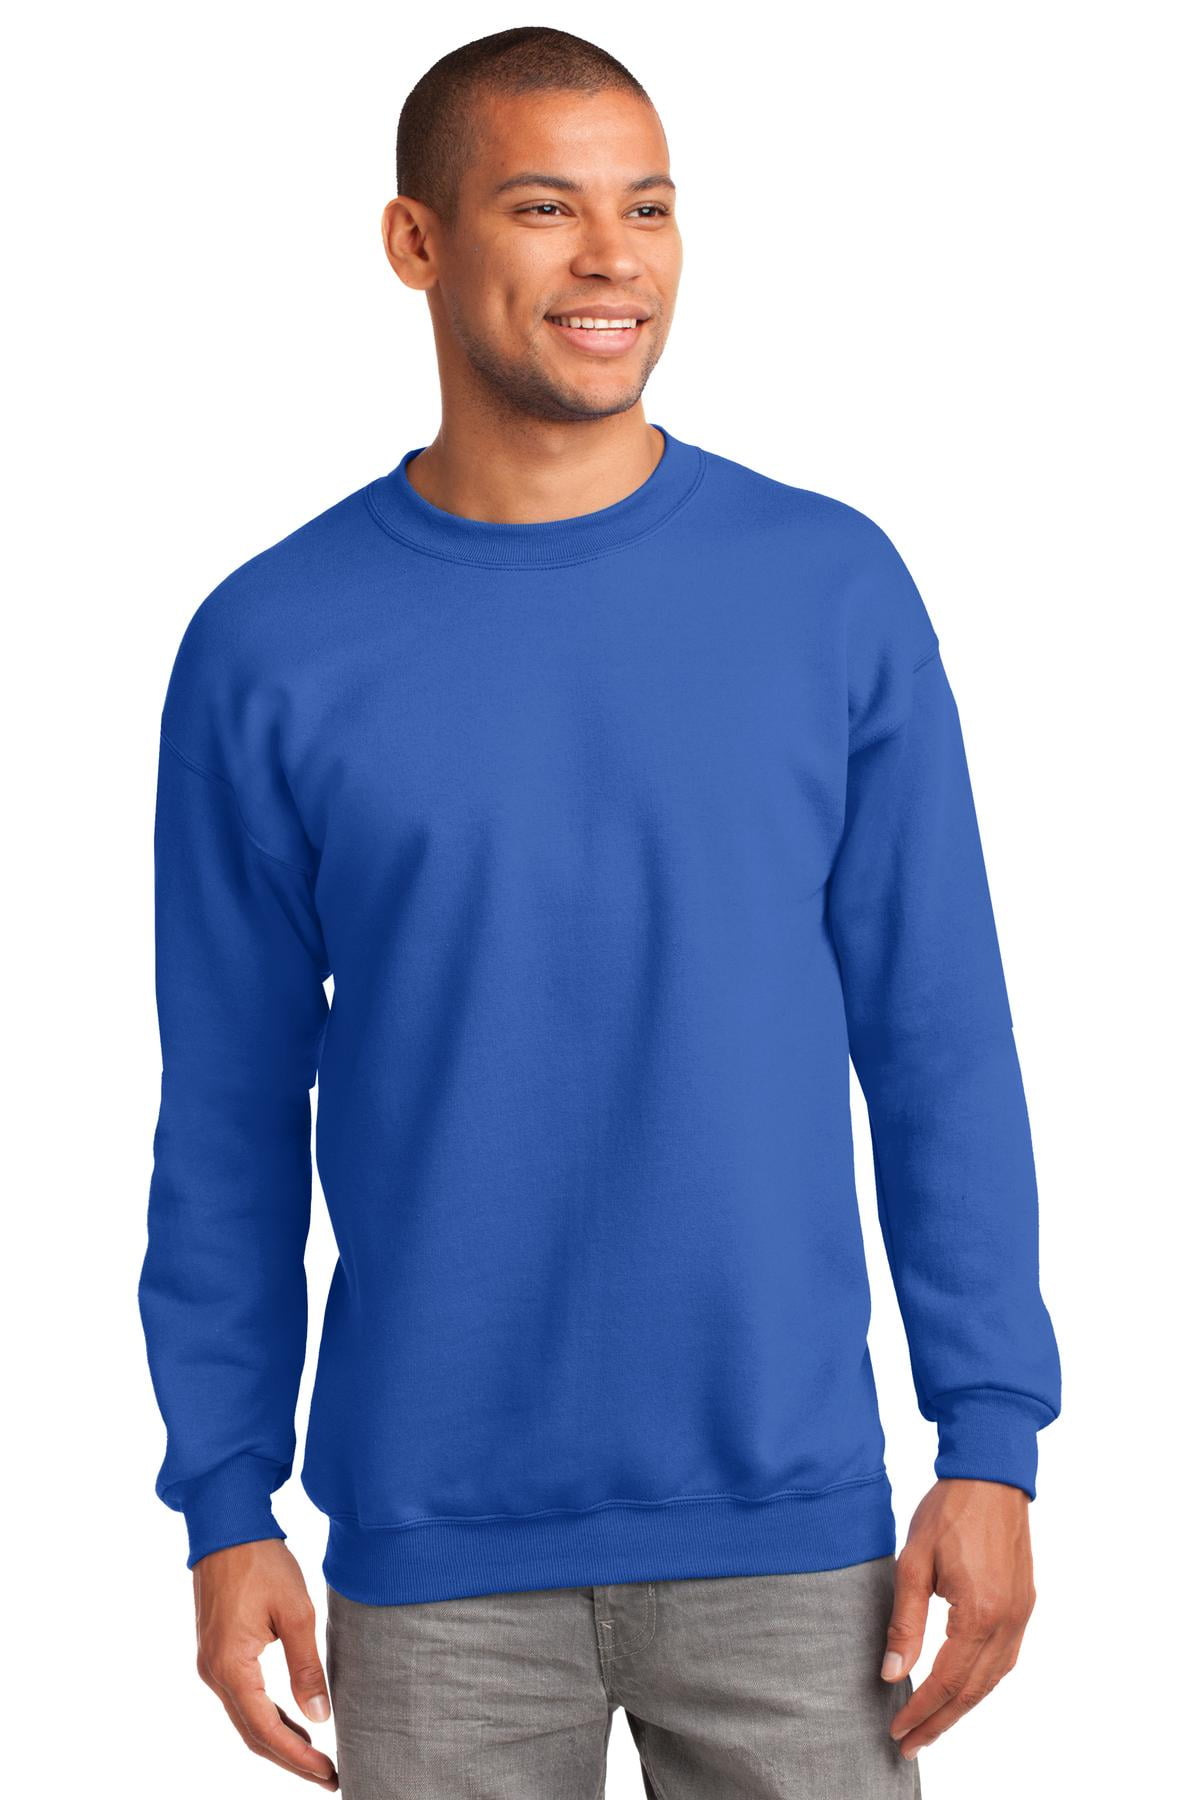 Port & Company Tall Crewneck Sweatshirt (PC90T) Royal Blue, 4XLT ...